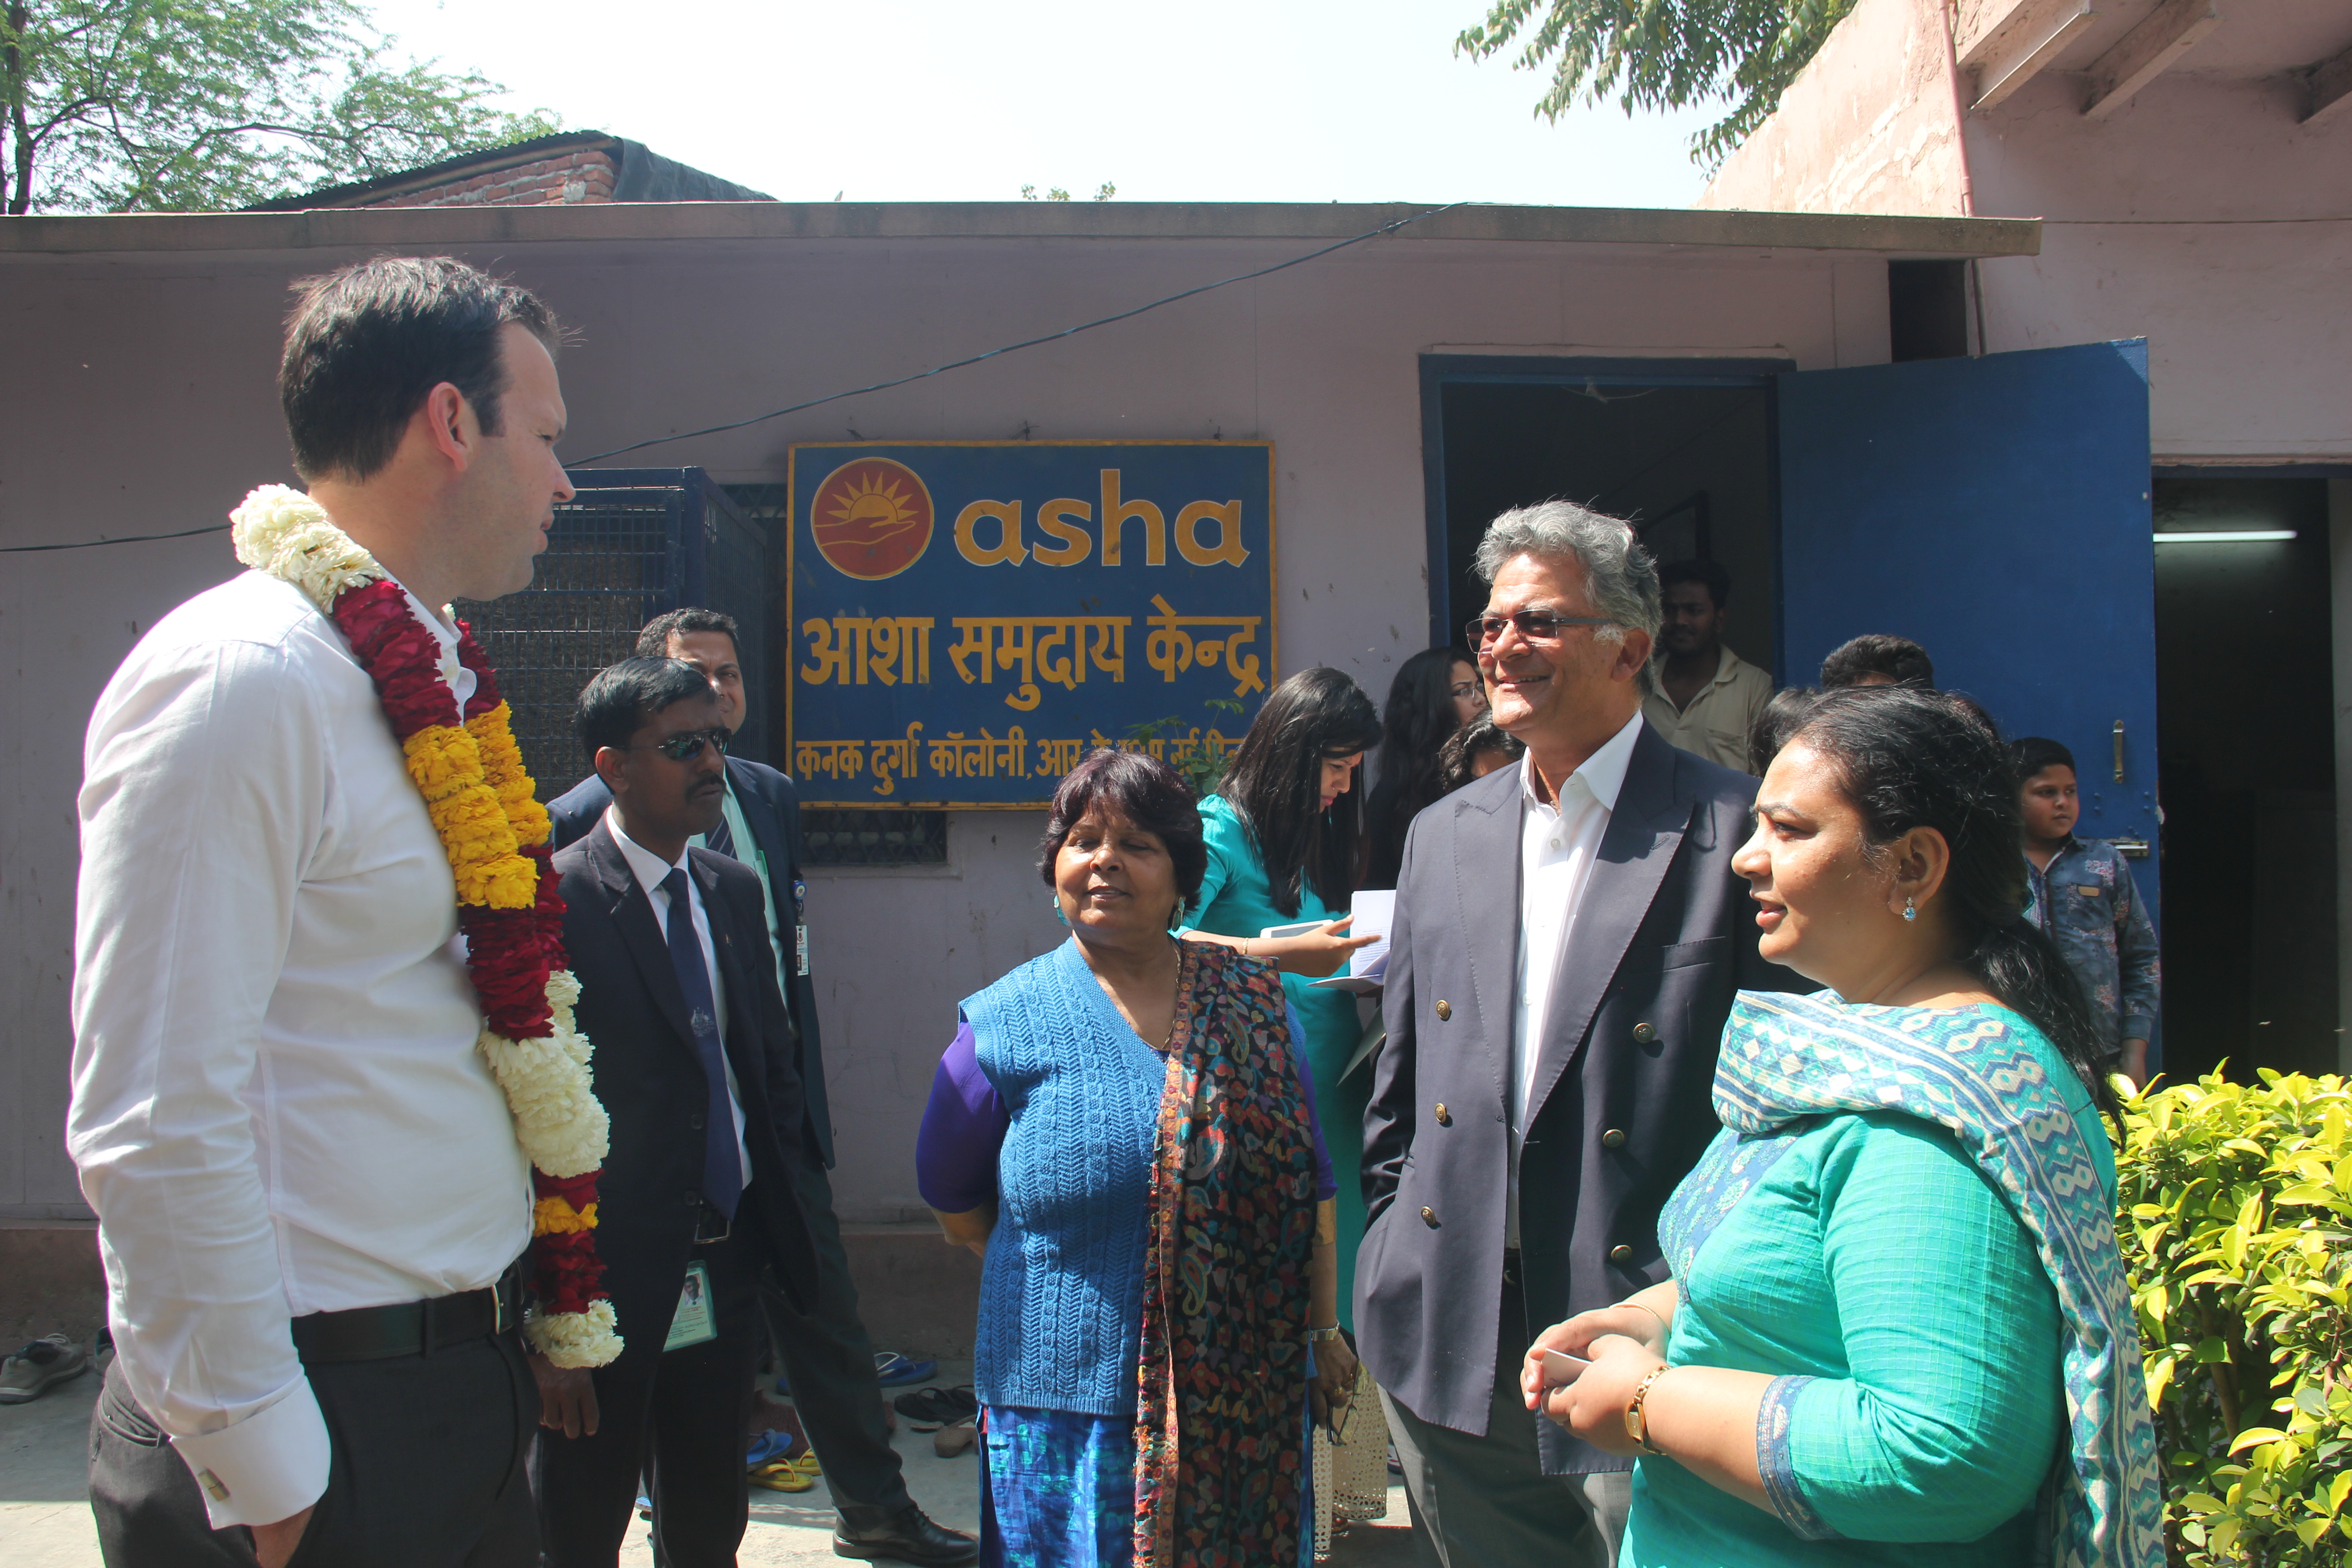 Australian Senator, Mathew Canavan, and Australia India Business Council's President Nik Senapati interacting with the Asha Team